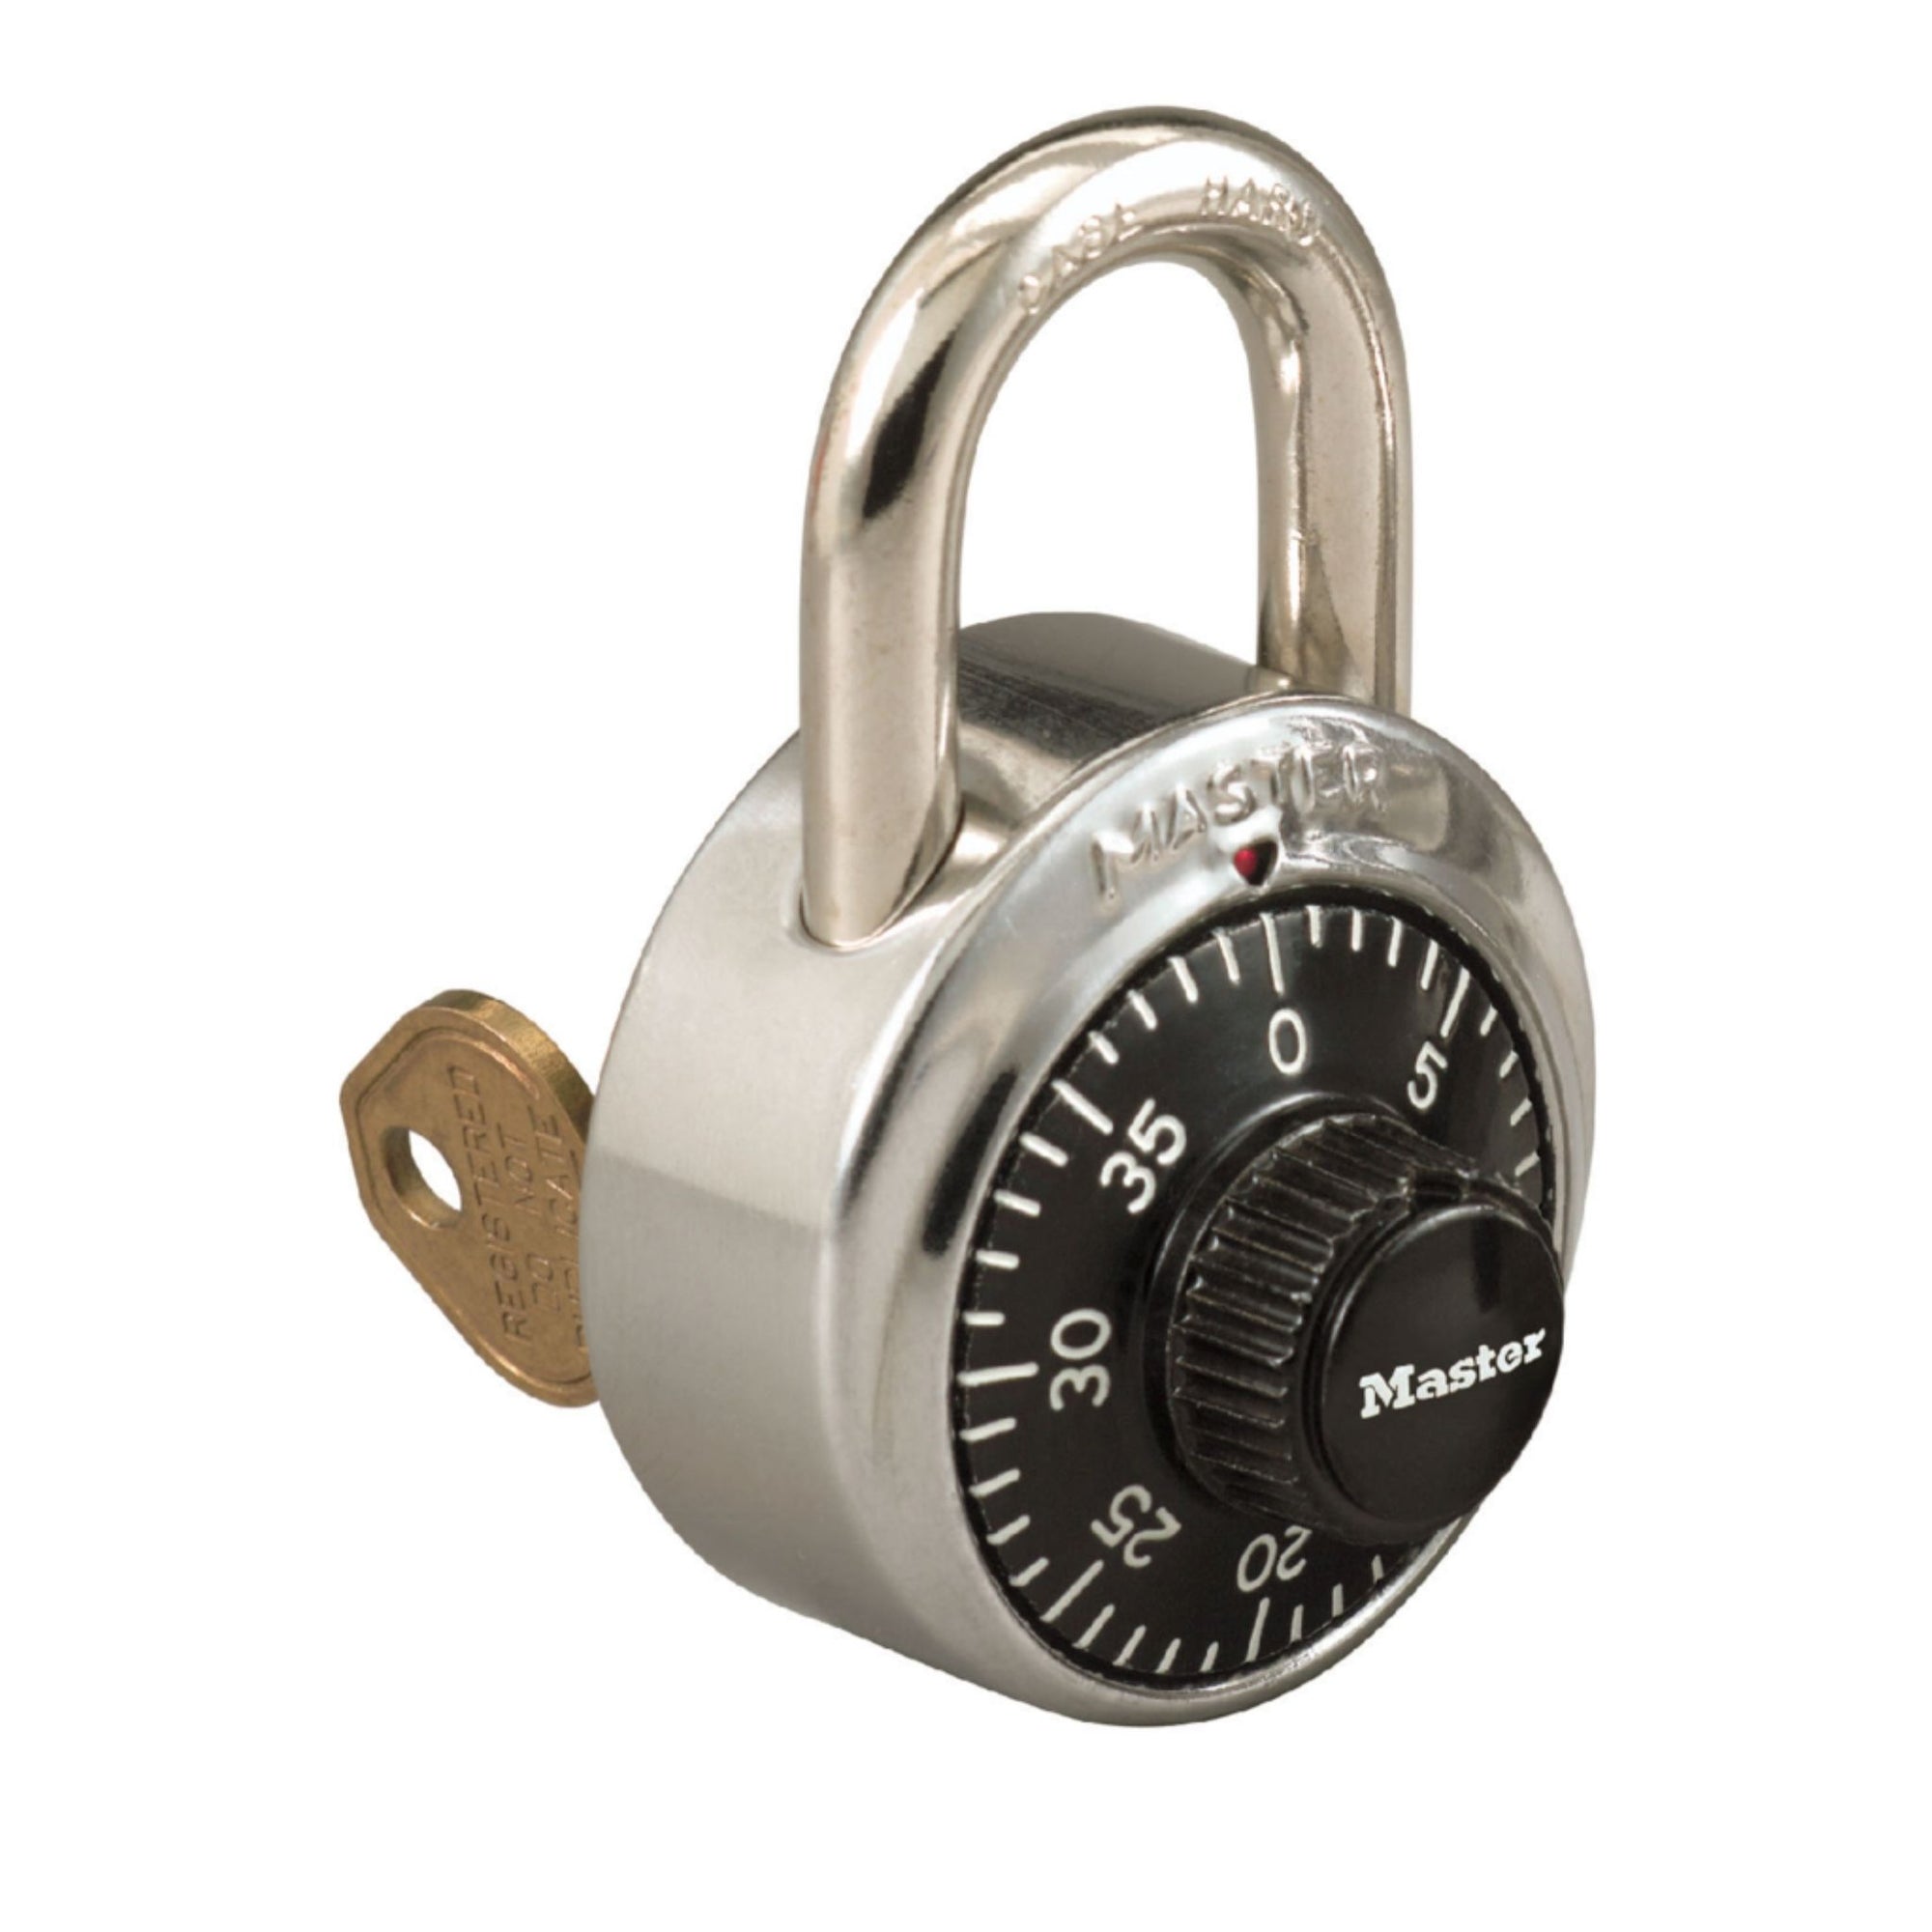 Master Lock 1525 V606 Combination Locker Padlock with Key Override - The Lock Source